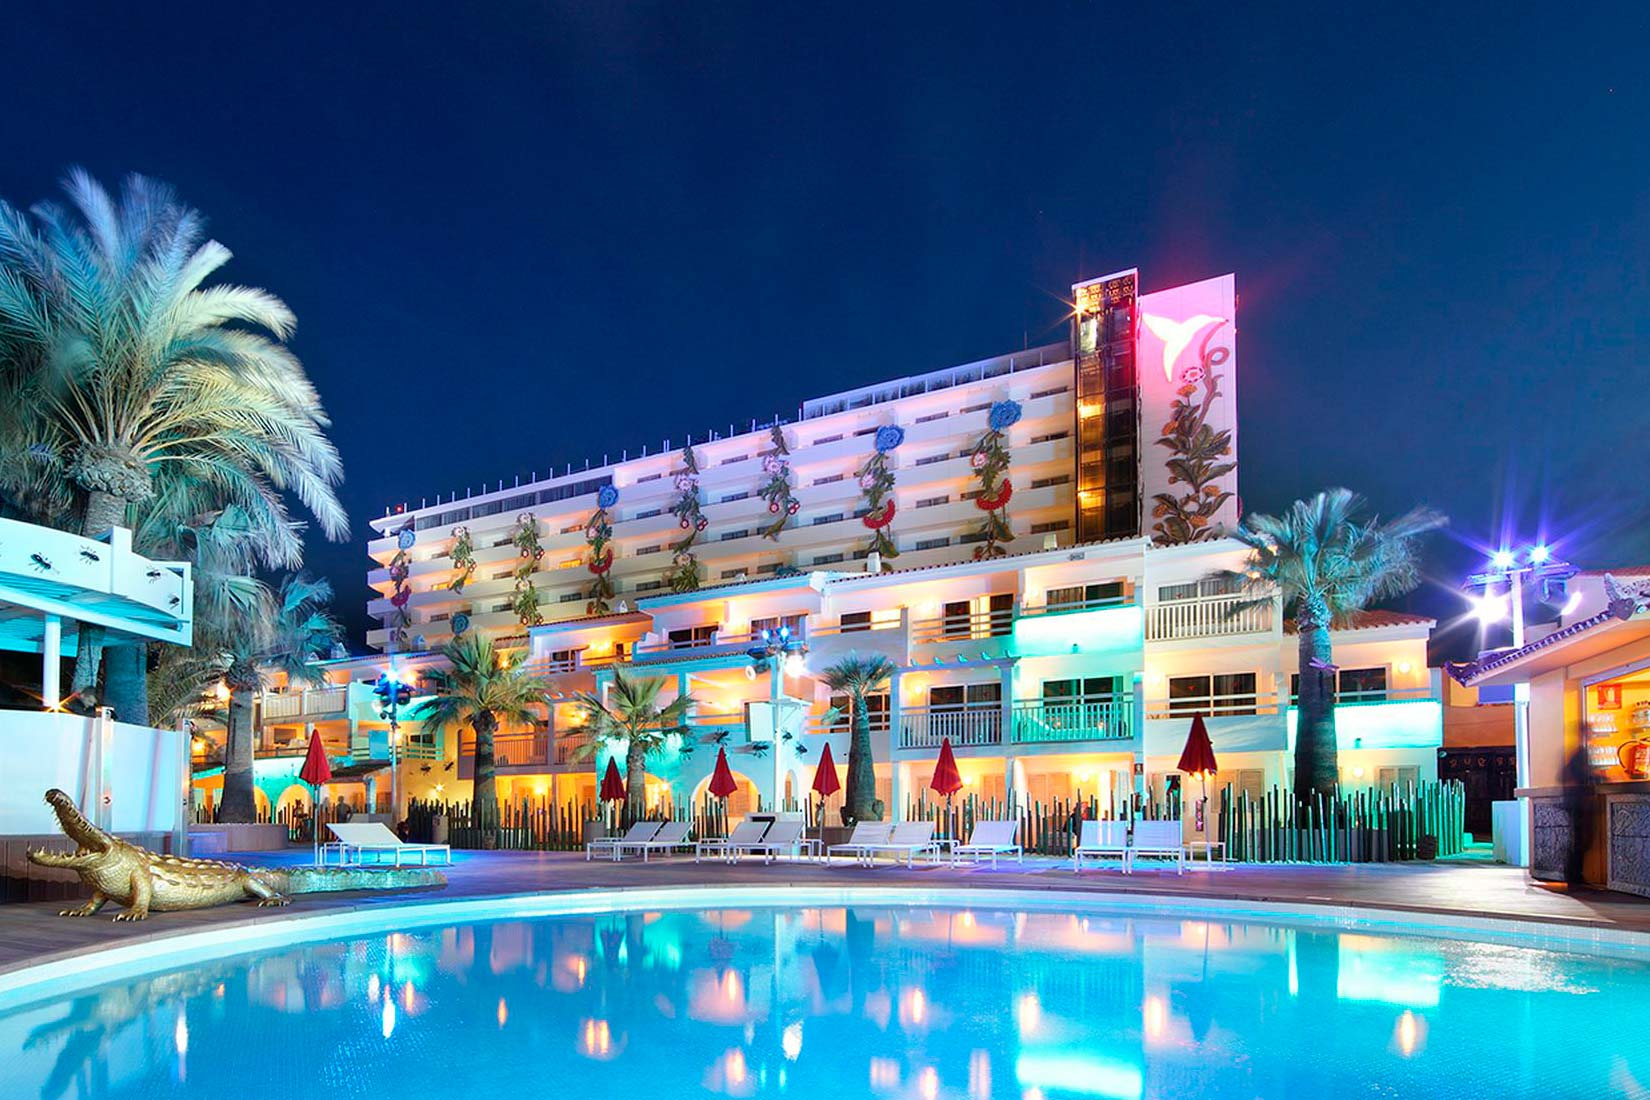 The automation of the Ushuaïa Ibiza Beach Hotel